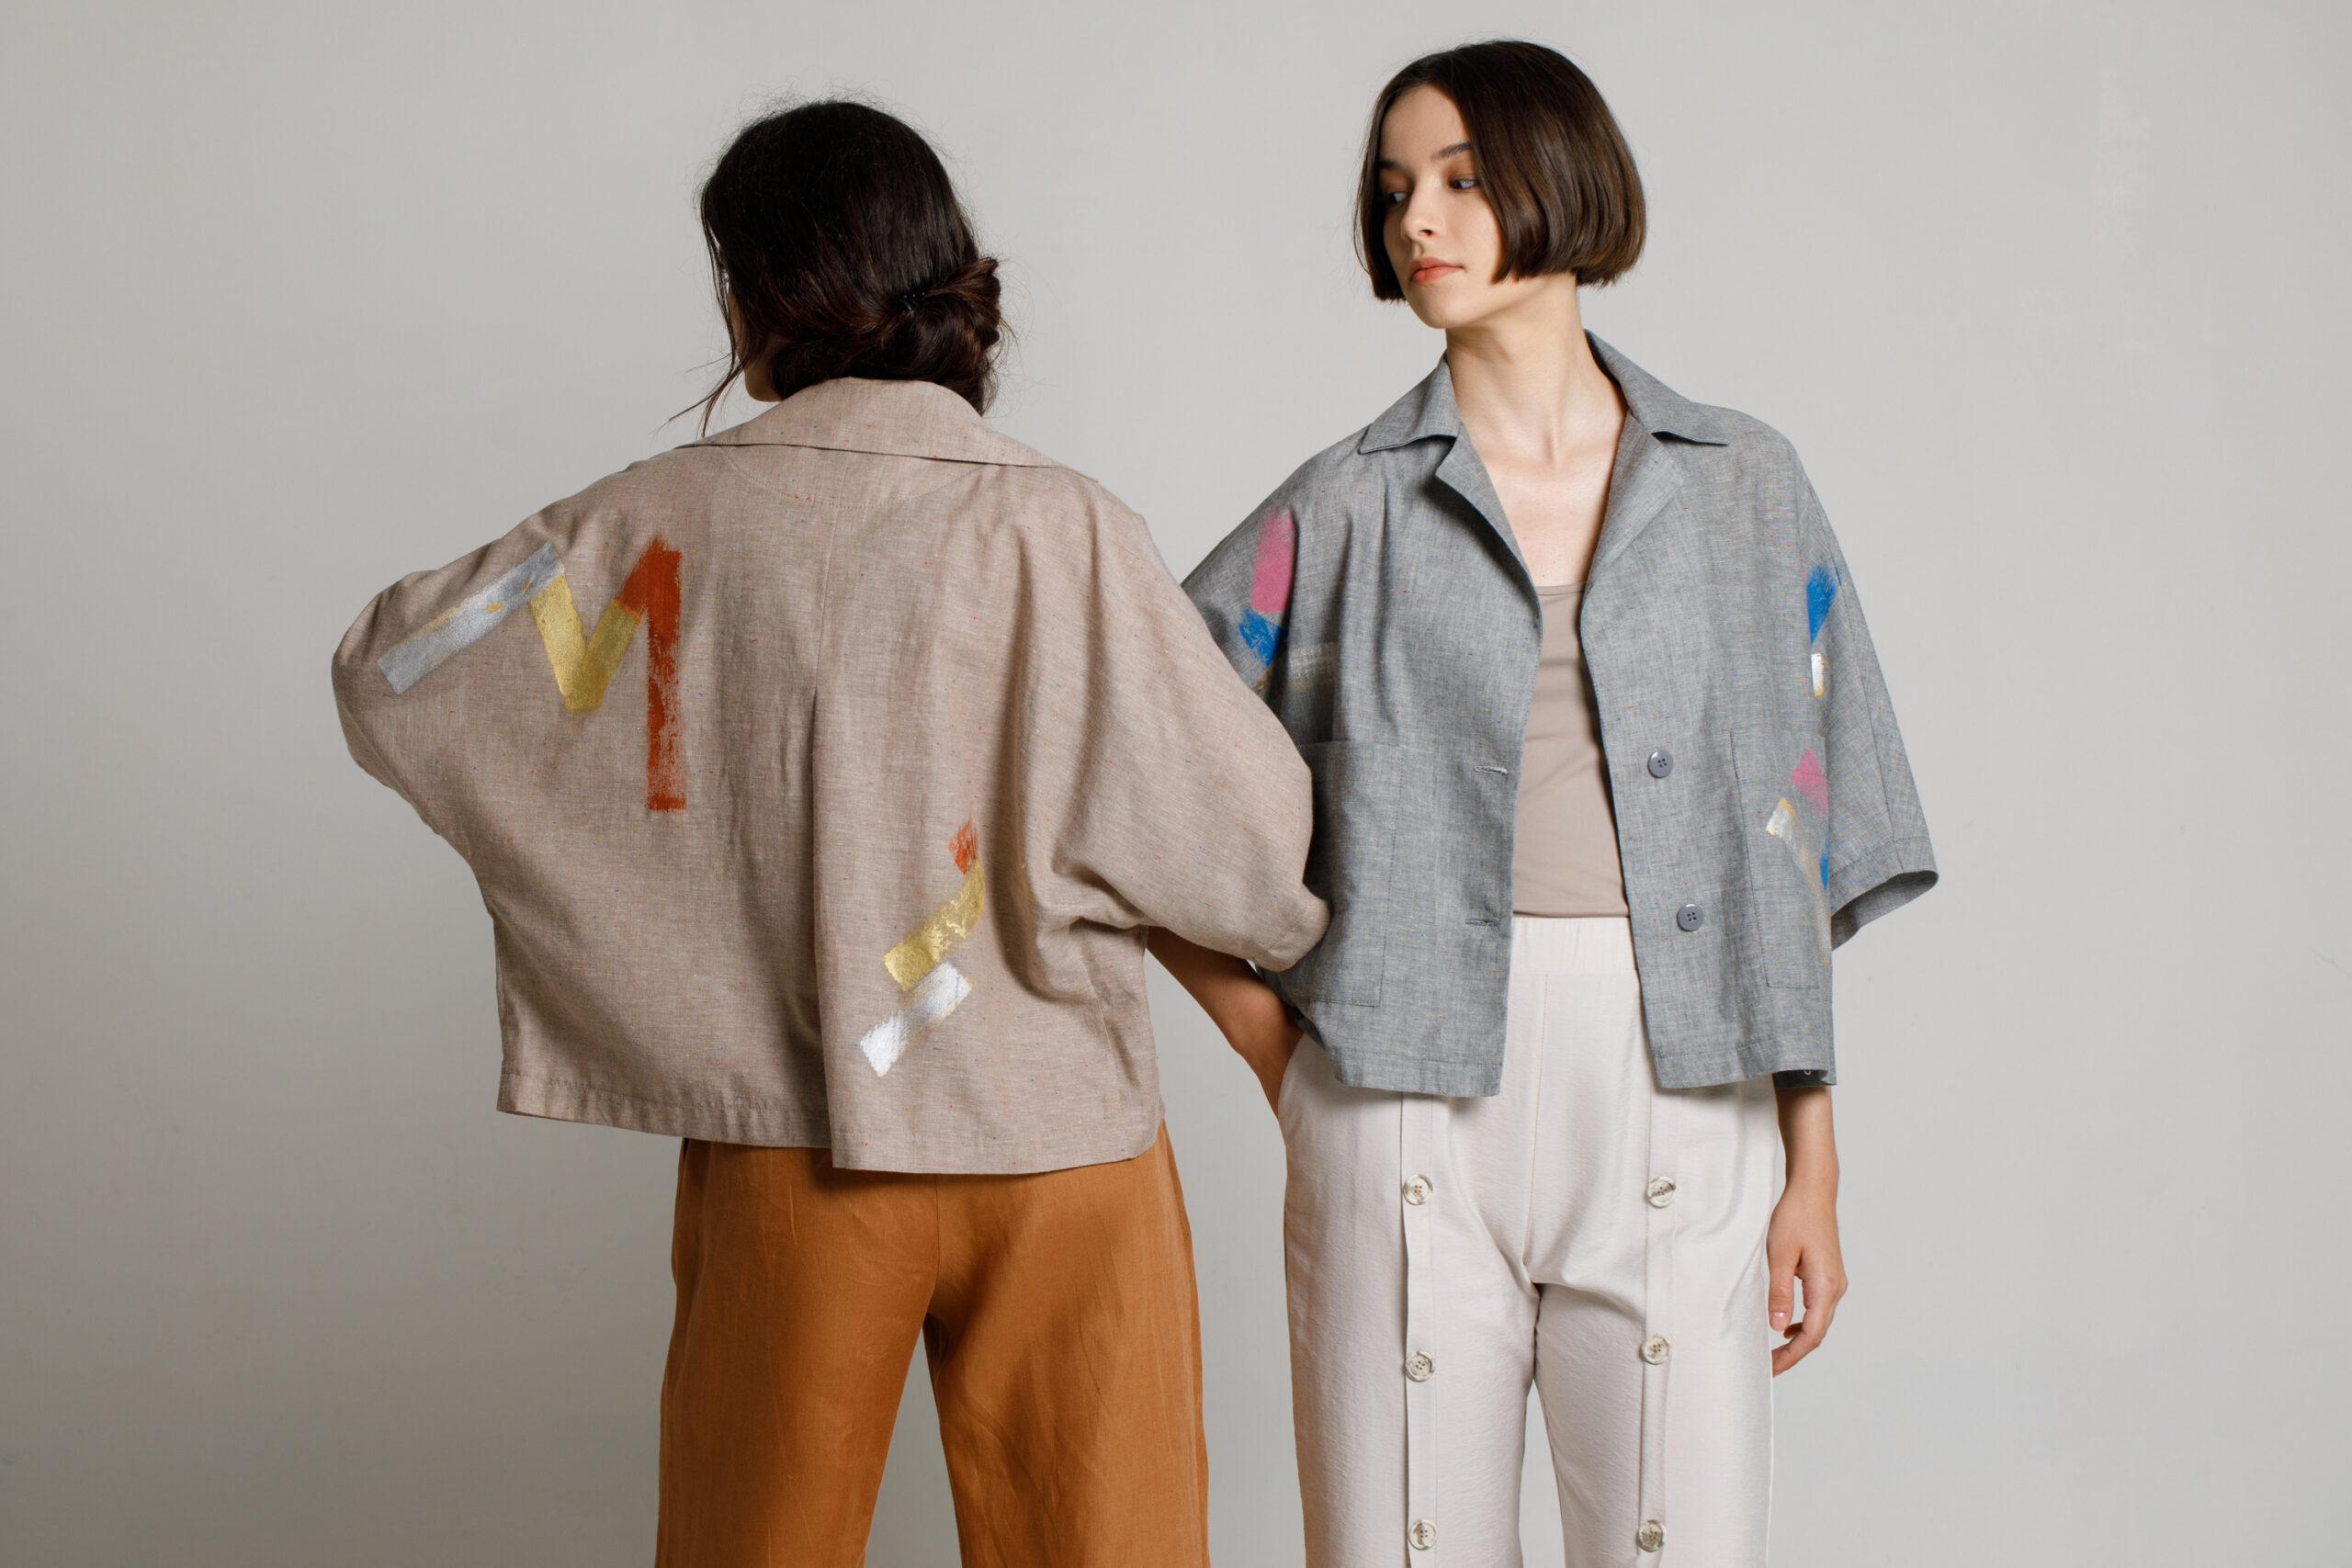 KIT casual gray hand-painted poplin jacket. Natural fabrics, original design, handmade embroidery